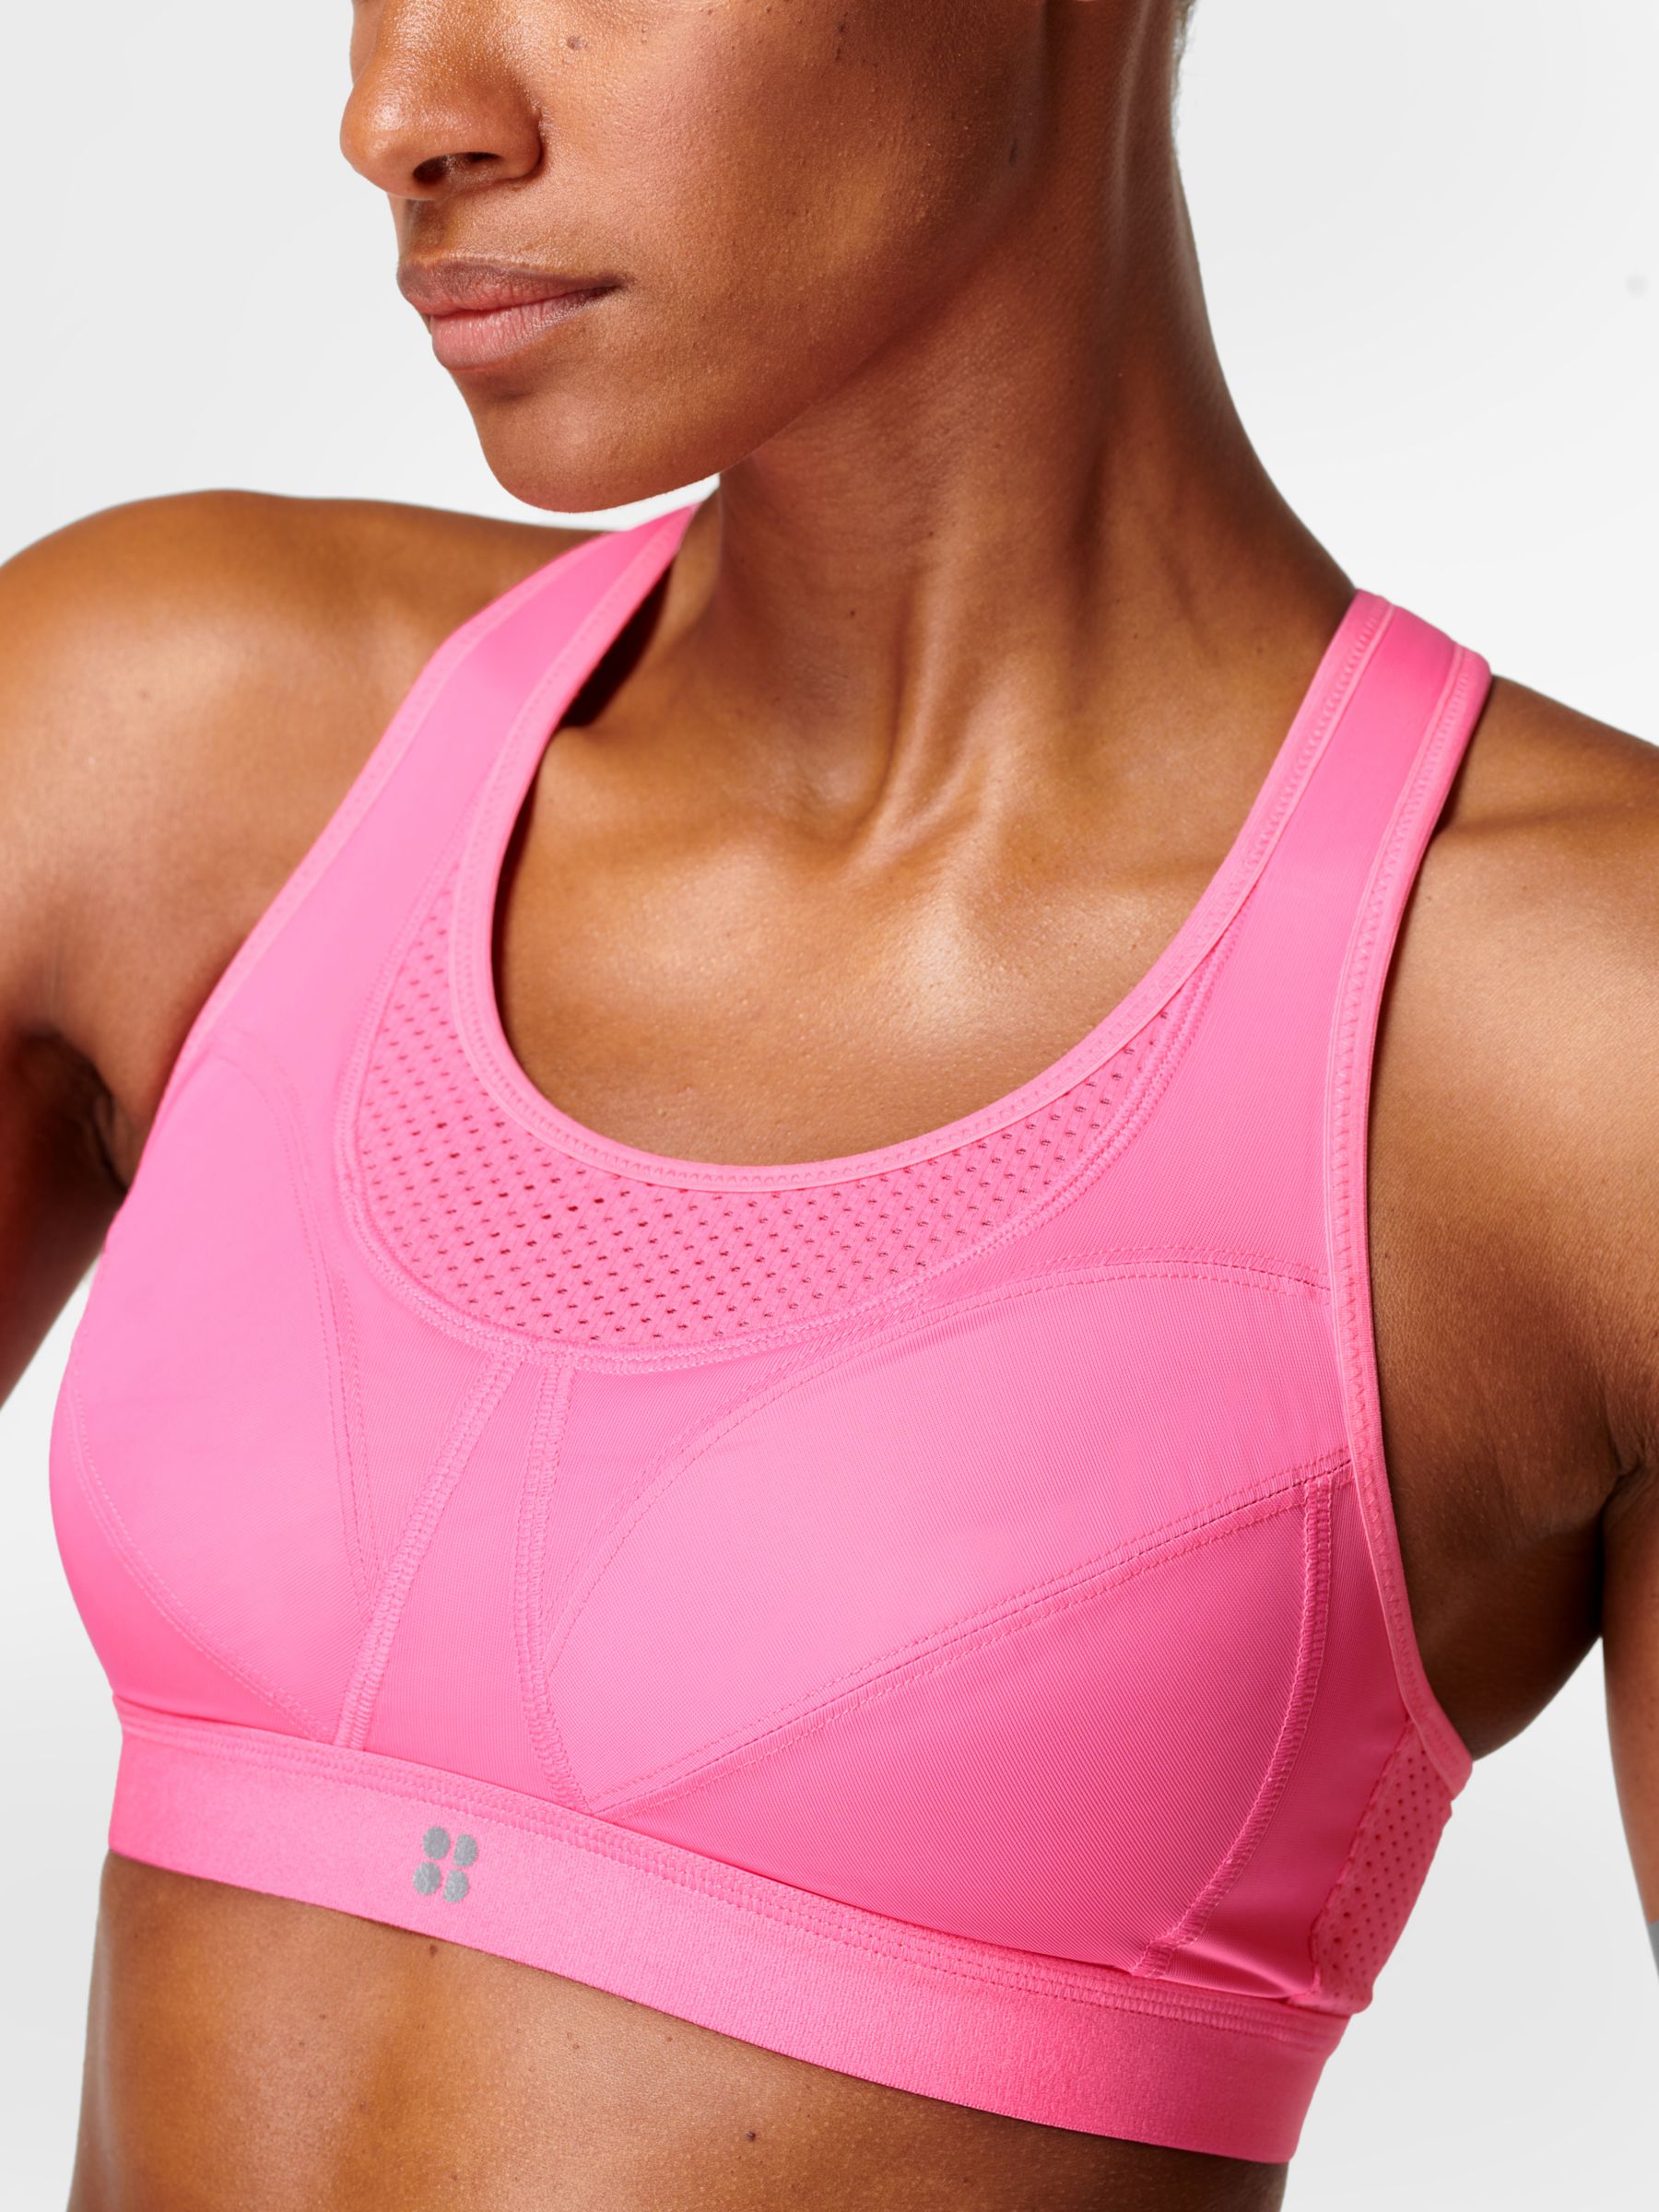 SWEATY BETTY Studio open-back sports bra M MEDIUM VELVET ROSE PINK NEW